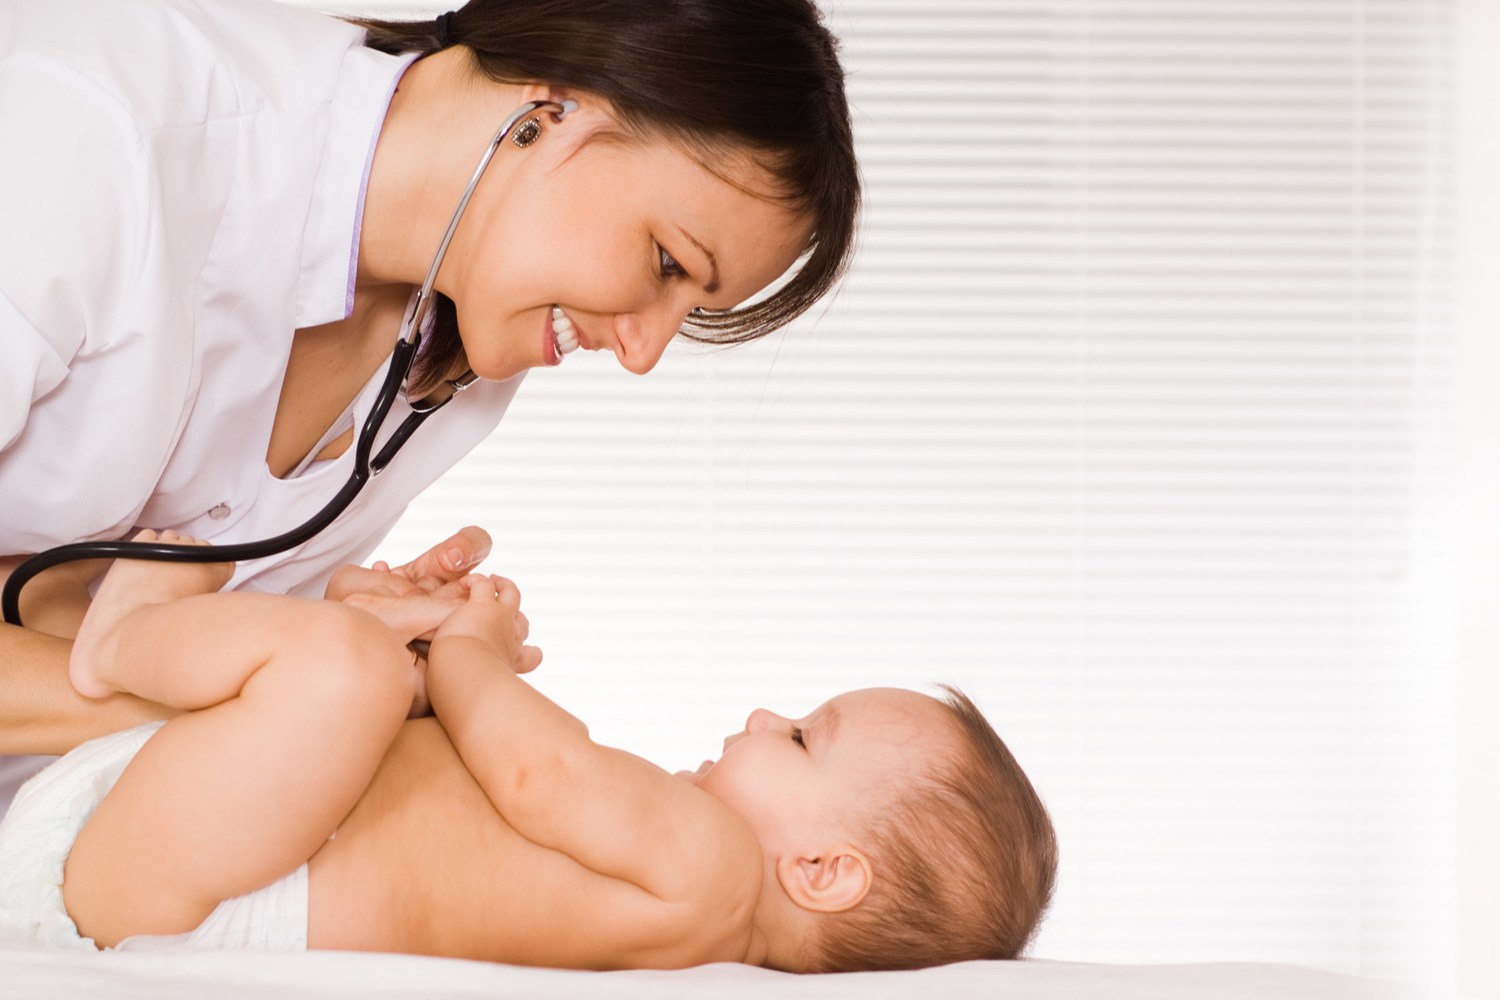 Treatment Options For Milia in Newborn Babies